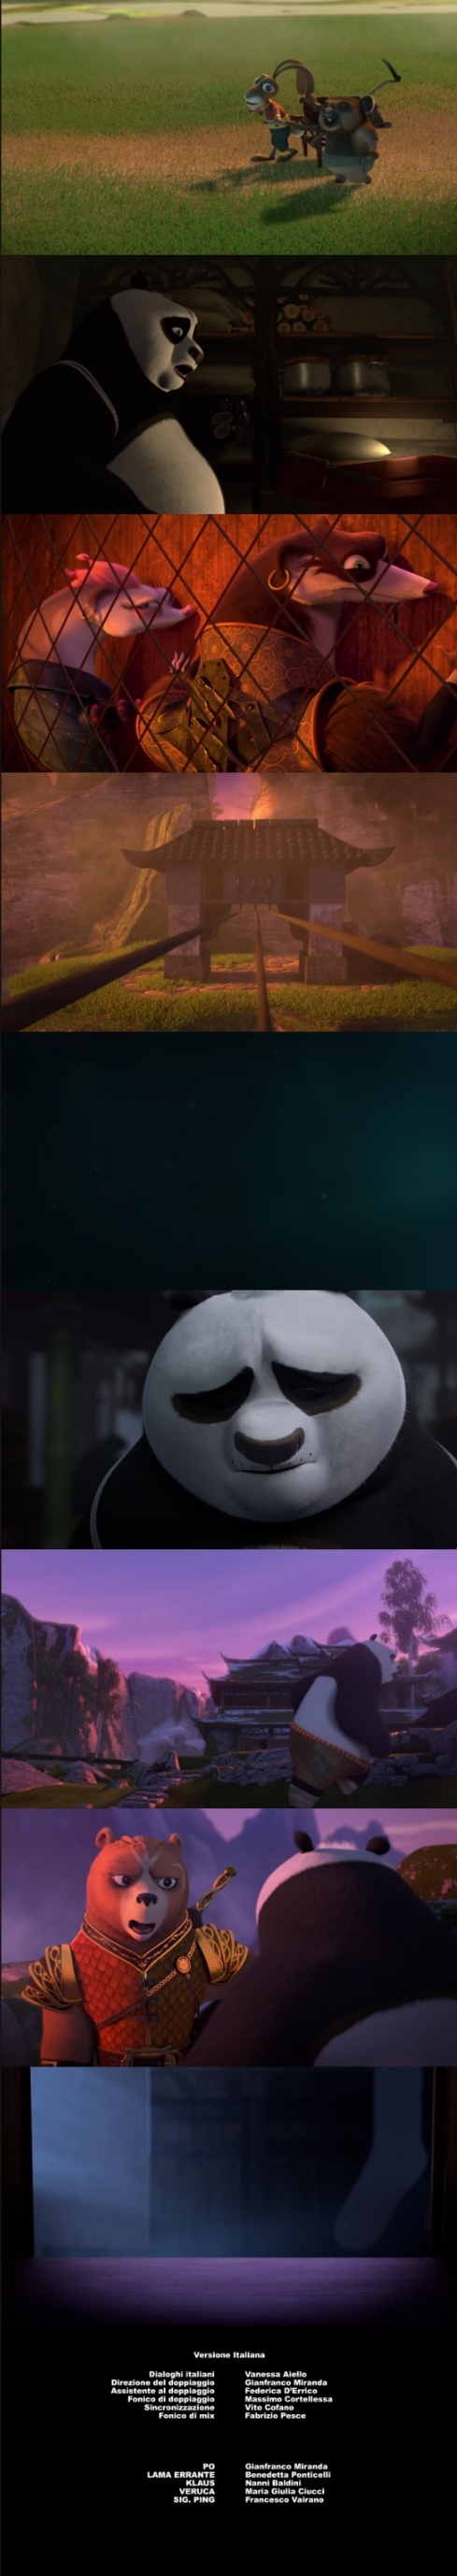  Screenshot Of Kung-Fu-Panda-The-Dragon-Knight-Season-1-Dual-Audio-Hindi-And-English-WEB-DL-480p-HEVC-Netflix-Series